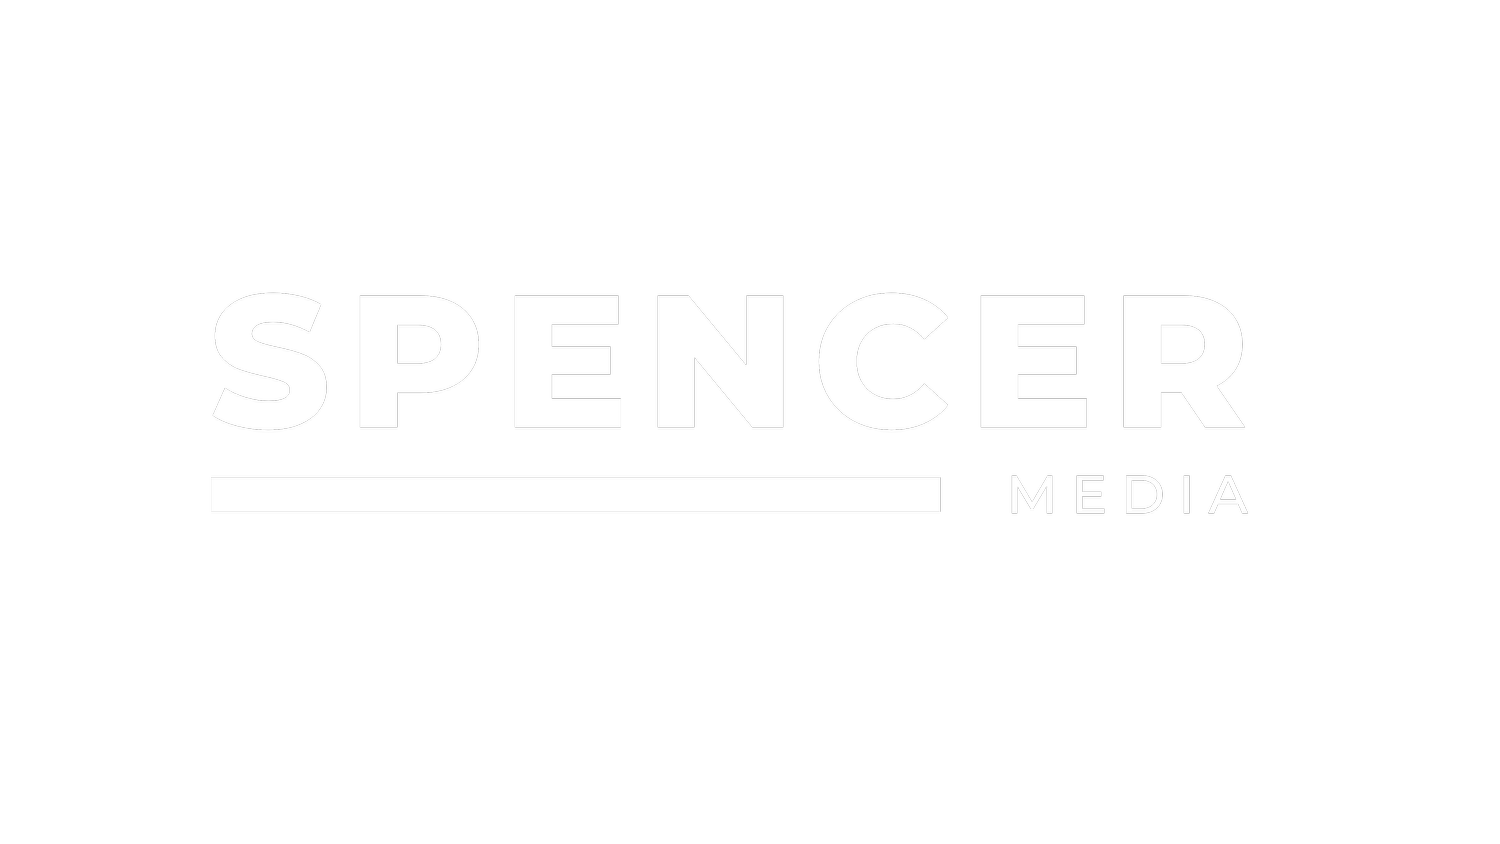 Spencer Media